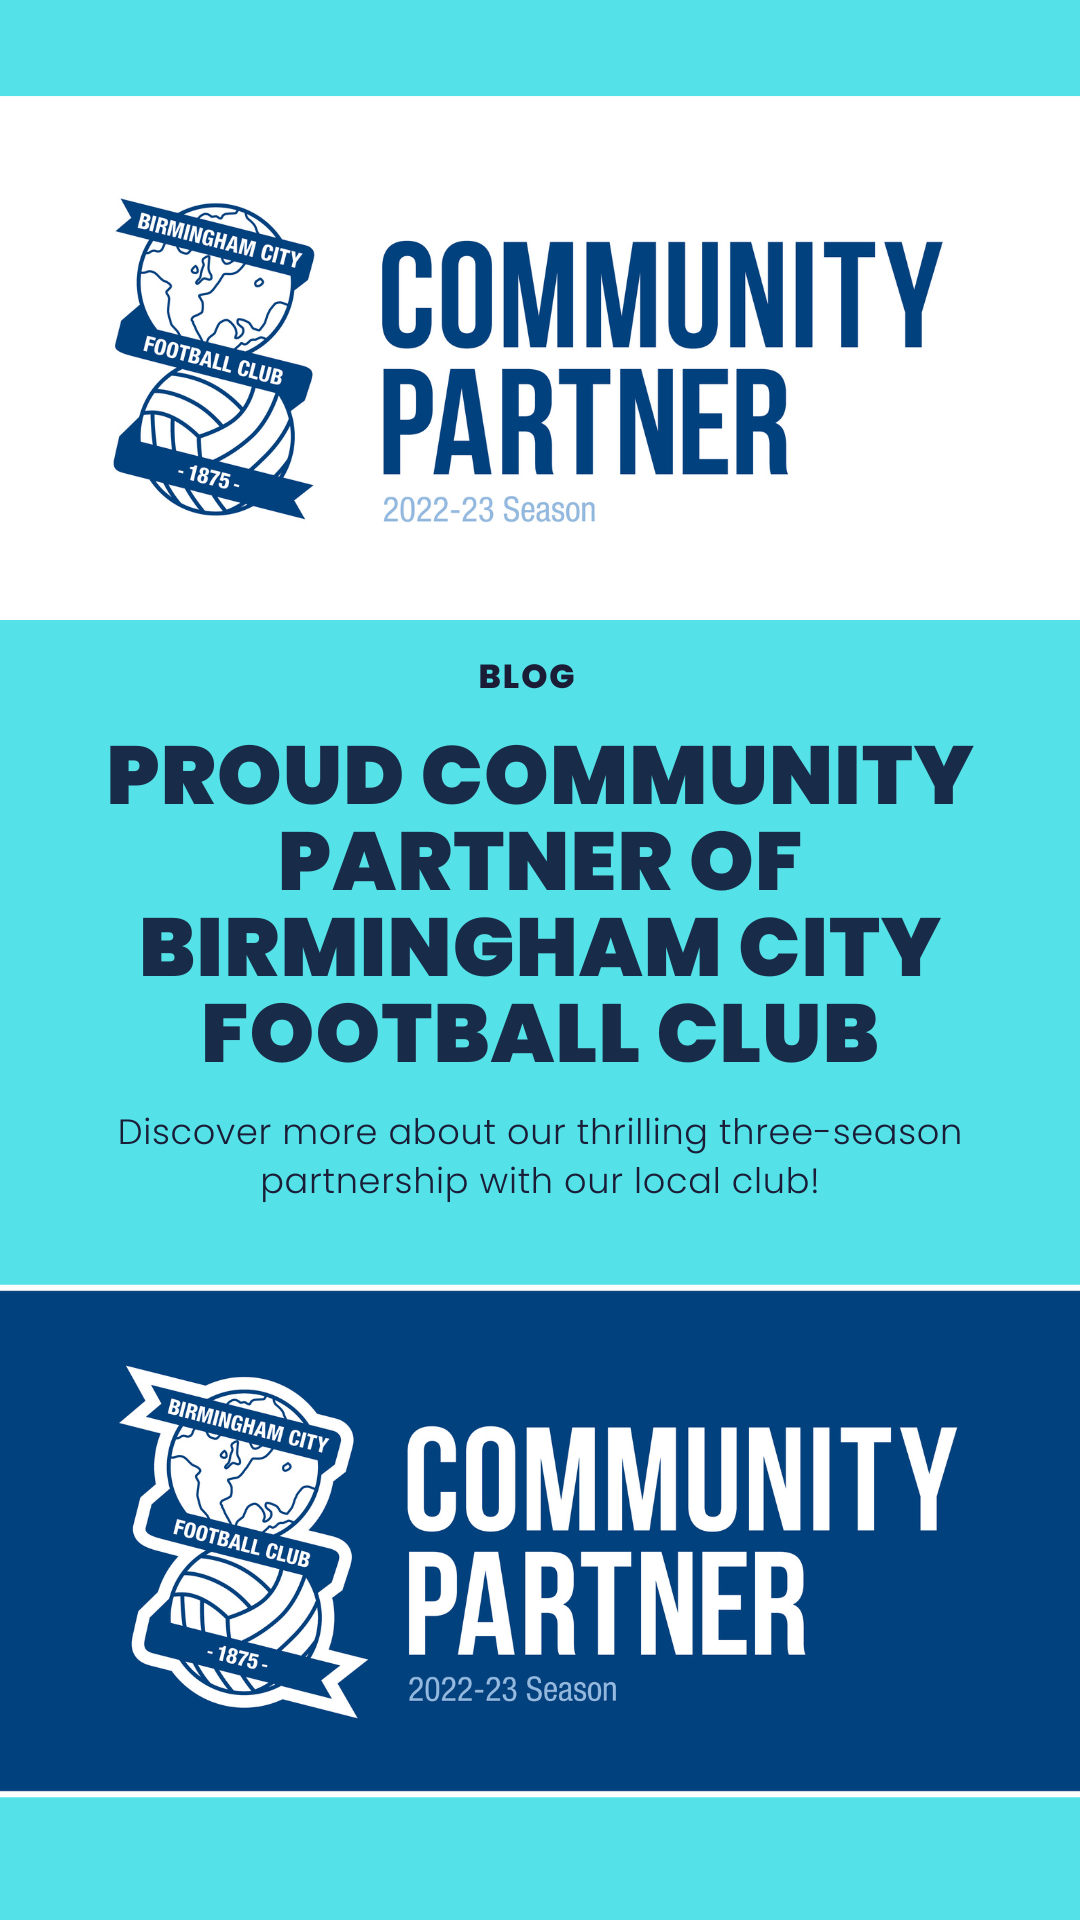 Equilibrium and Birmingham City FC Community Partnership blog